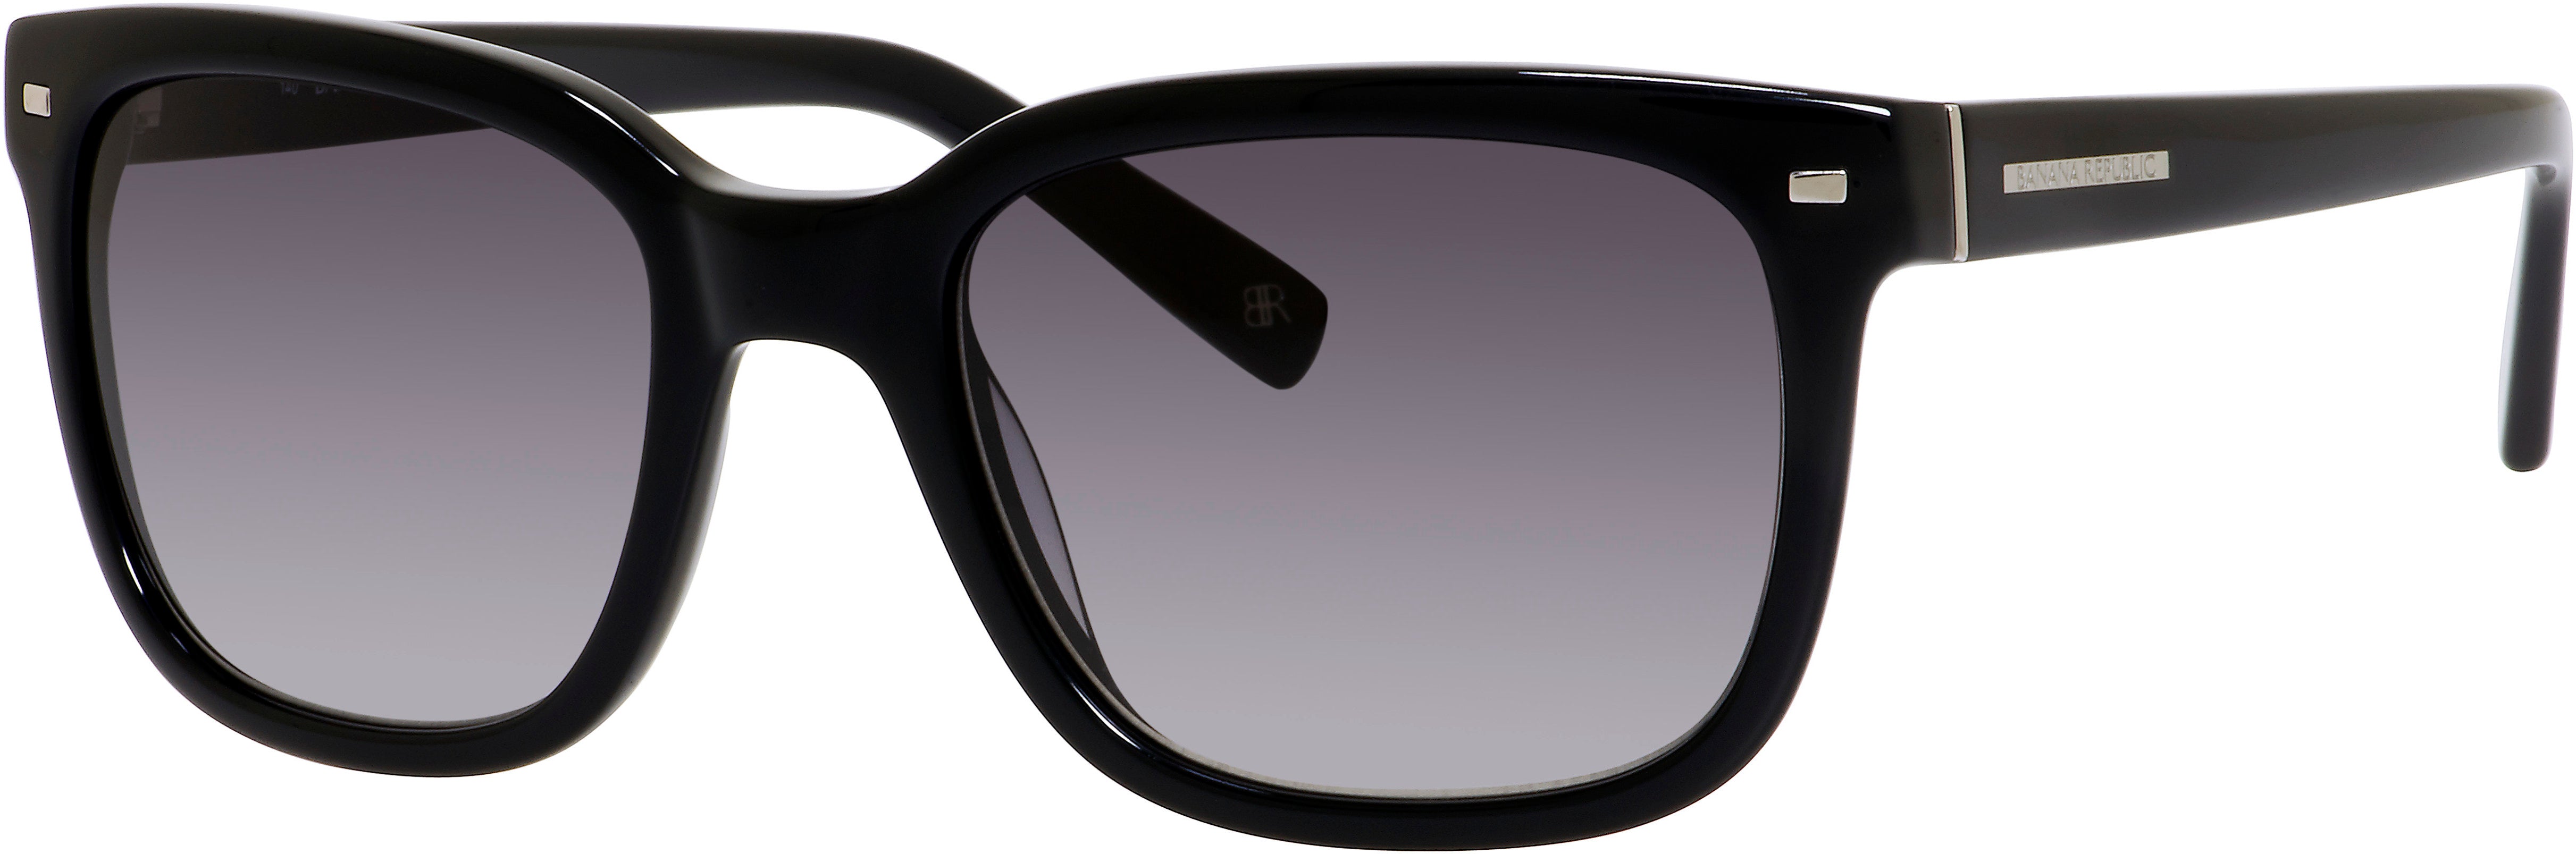 Banana Republic Colin/S Rectangular Sunglasses 0807-0807  Black (Y7 Gray Gradient)